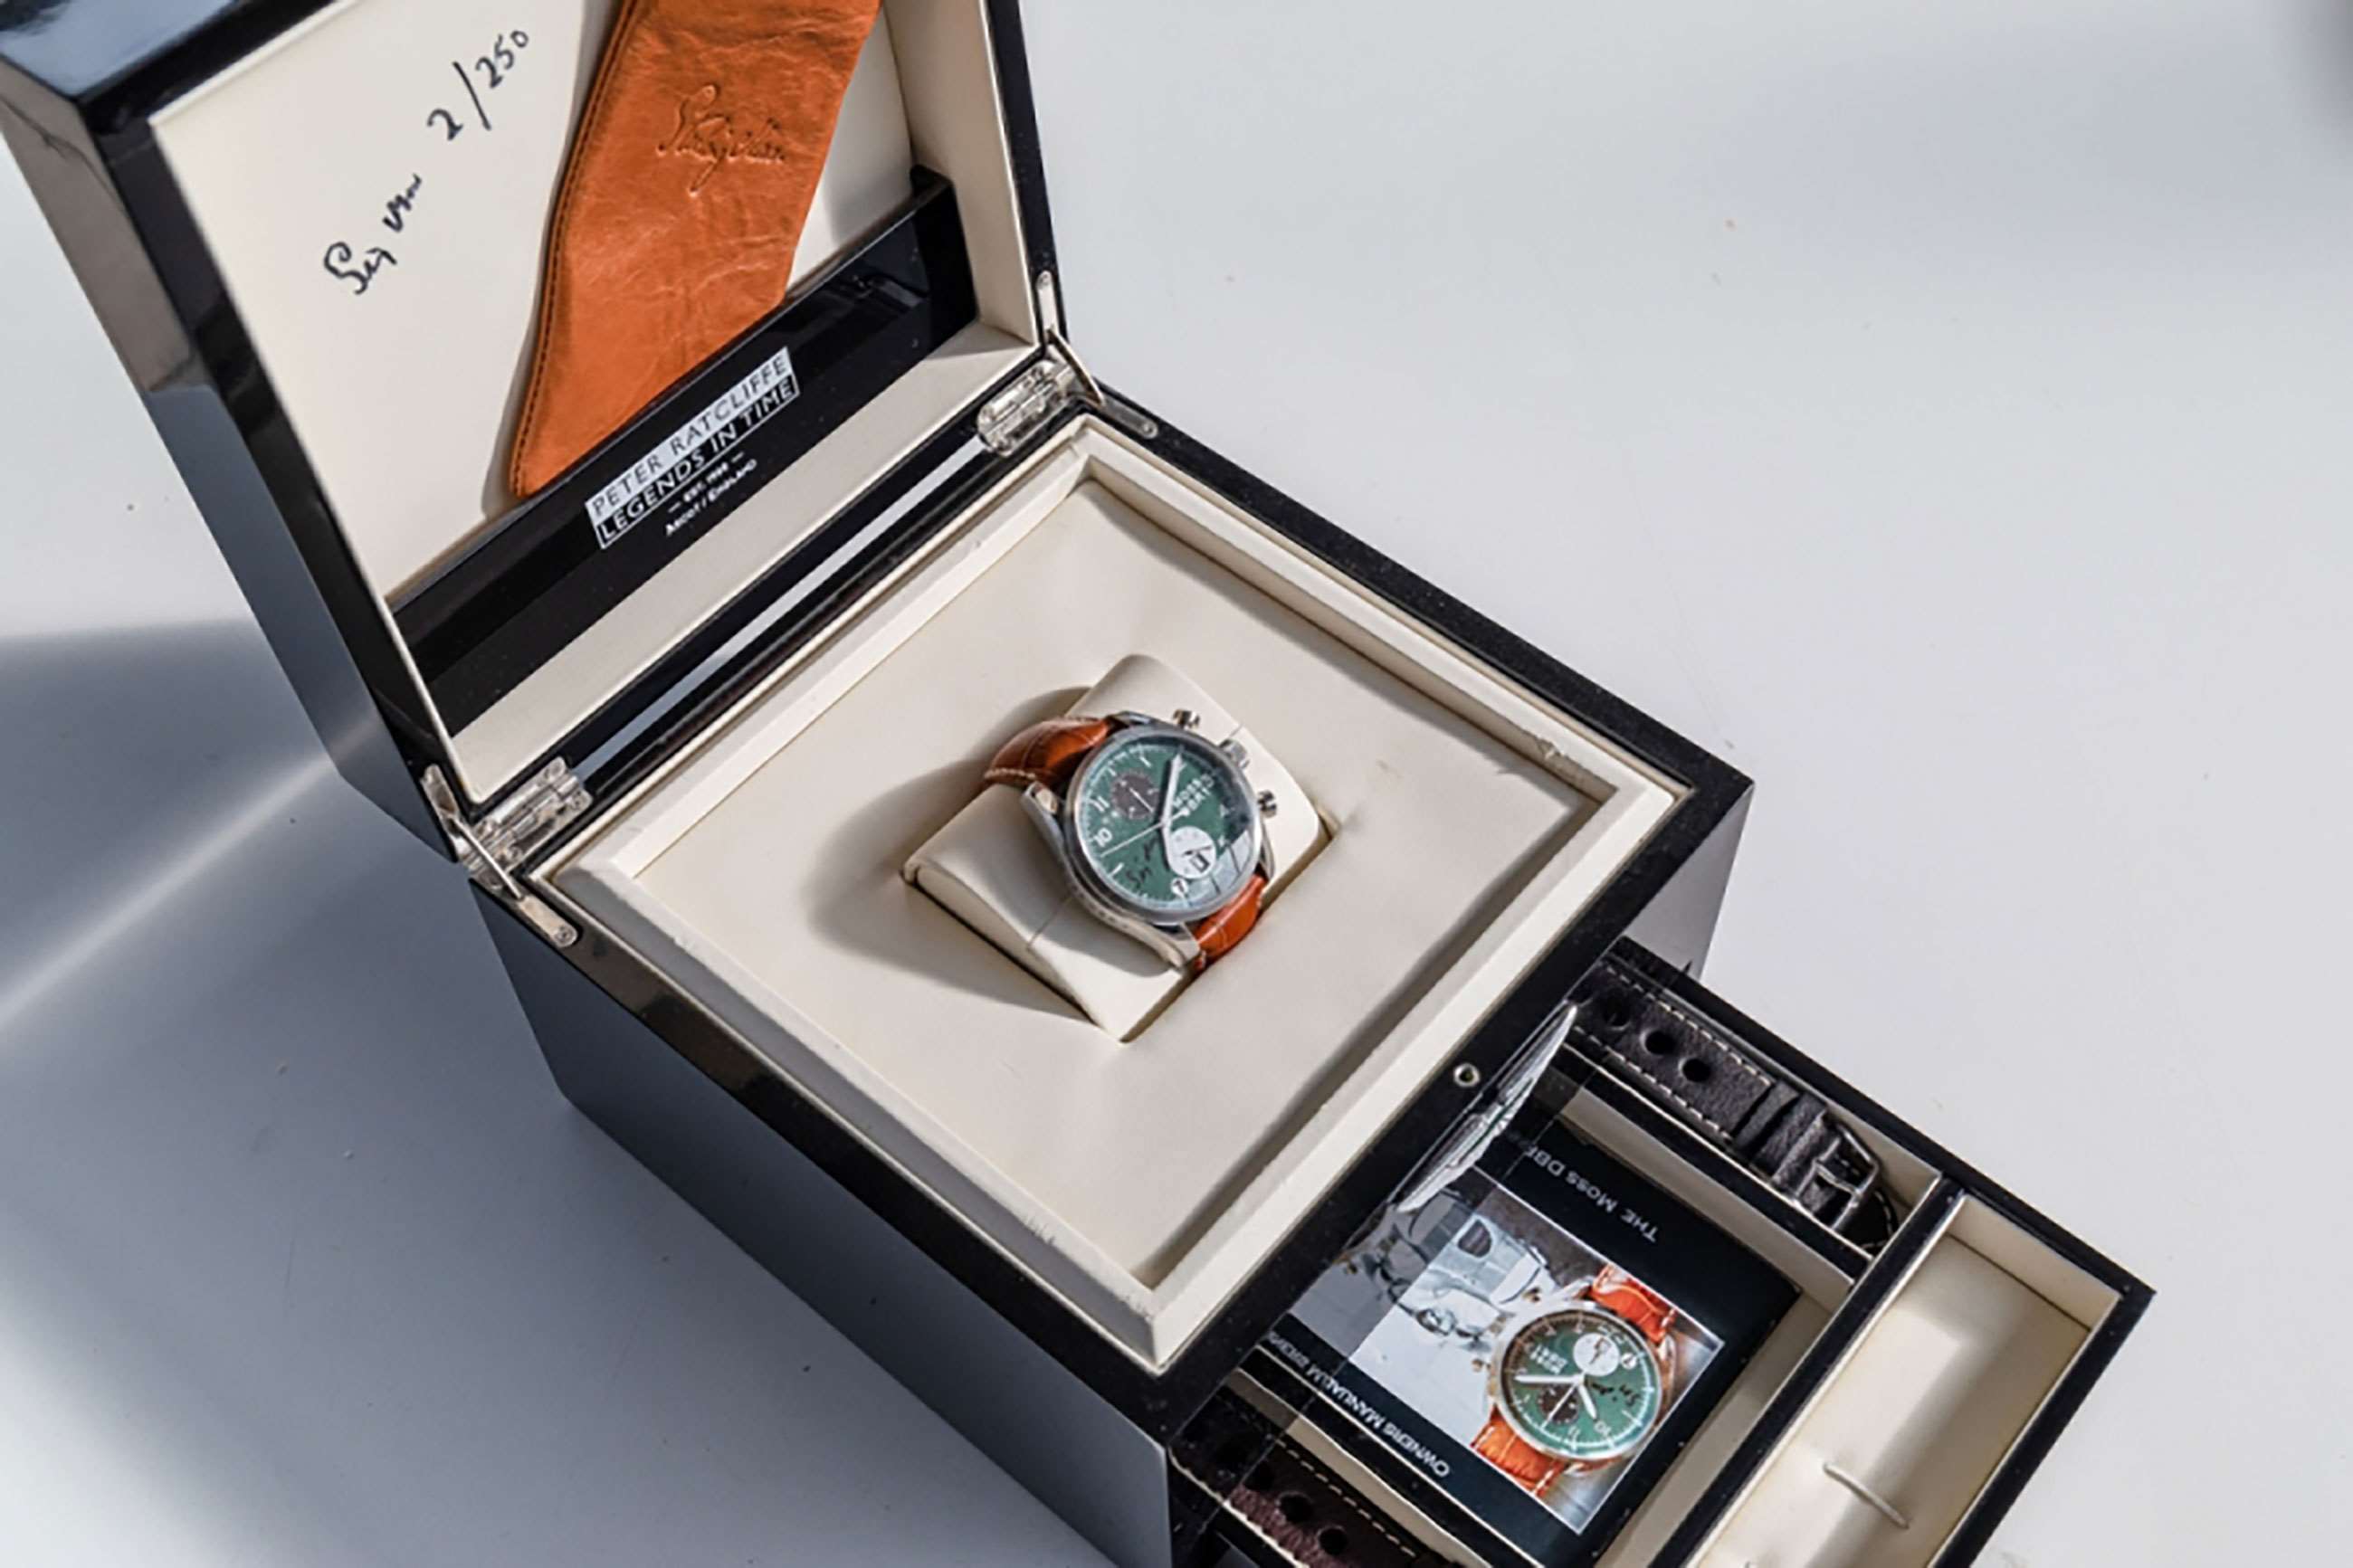 stirling-moss-memorabilia-sale-aston-martin-dbr1-watch-silverstone-auctions-goodwood-13112020.jpg